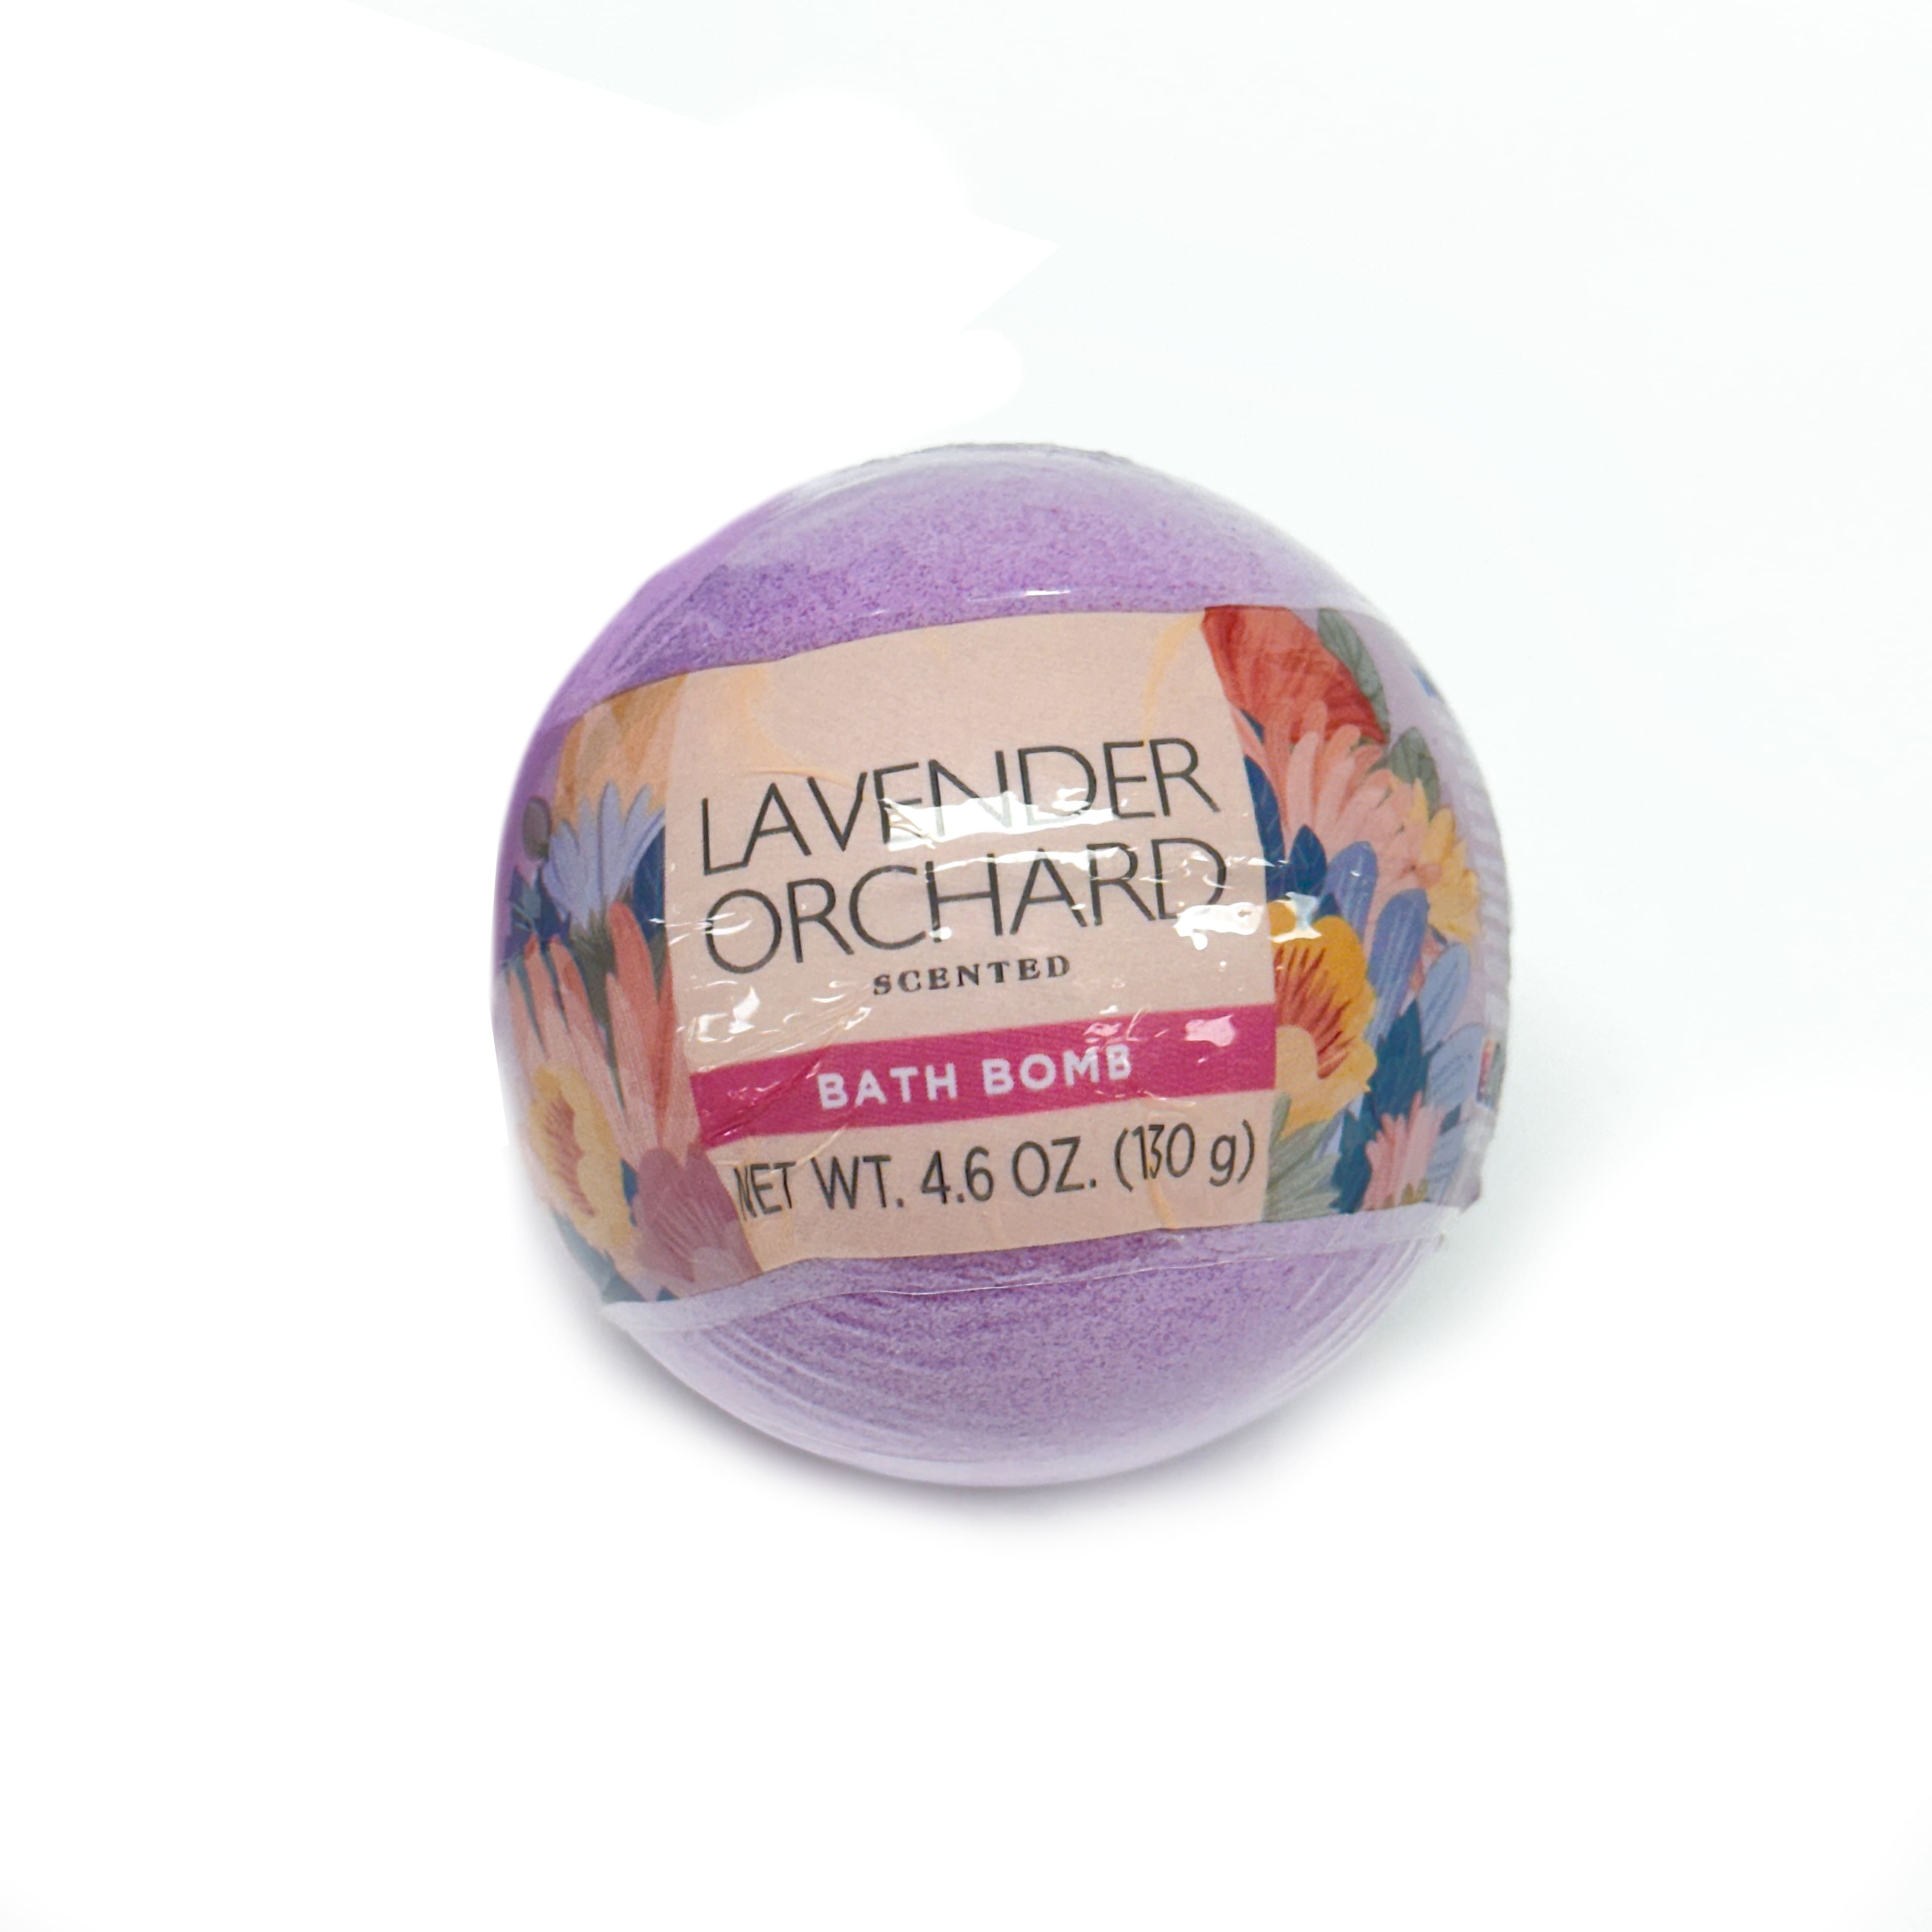 Lavender Orchard Scented Bath Bomb